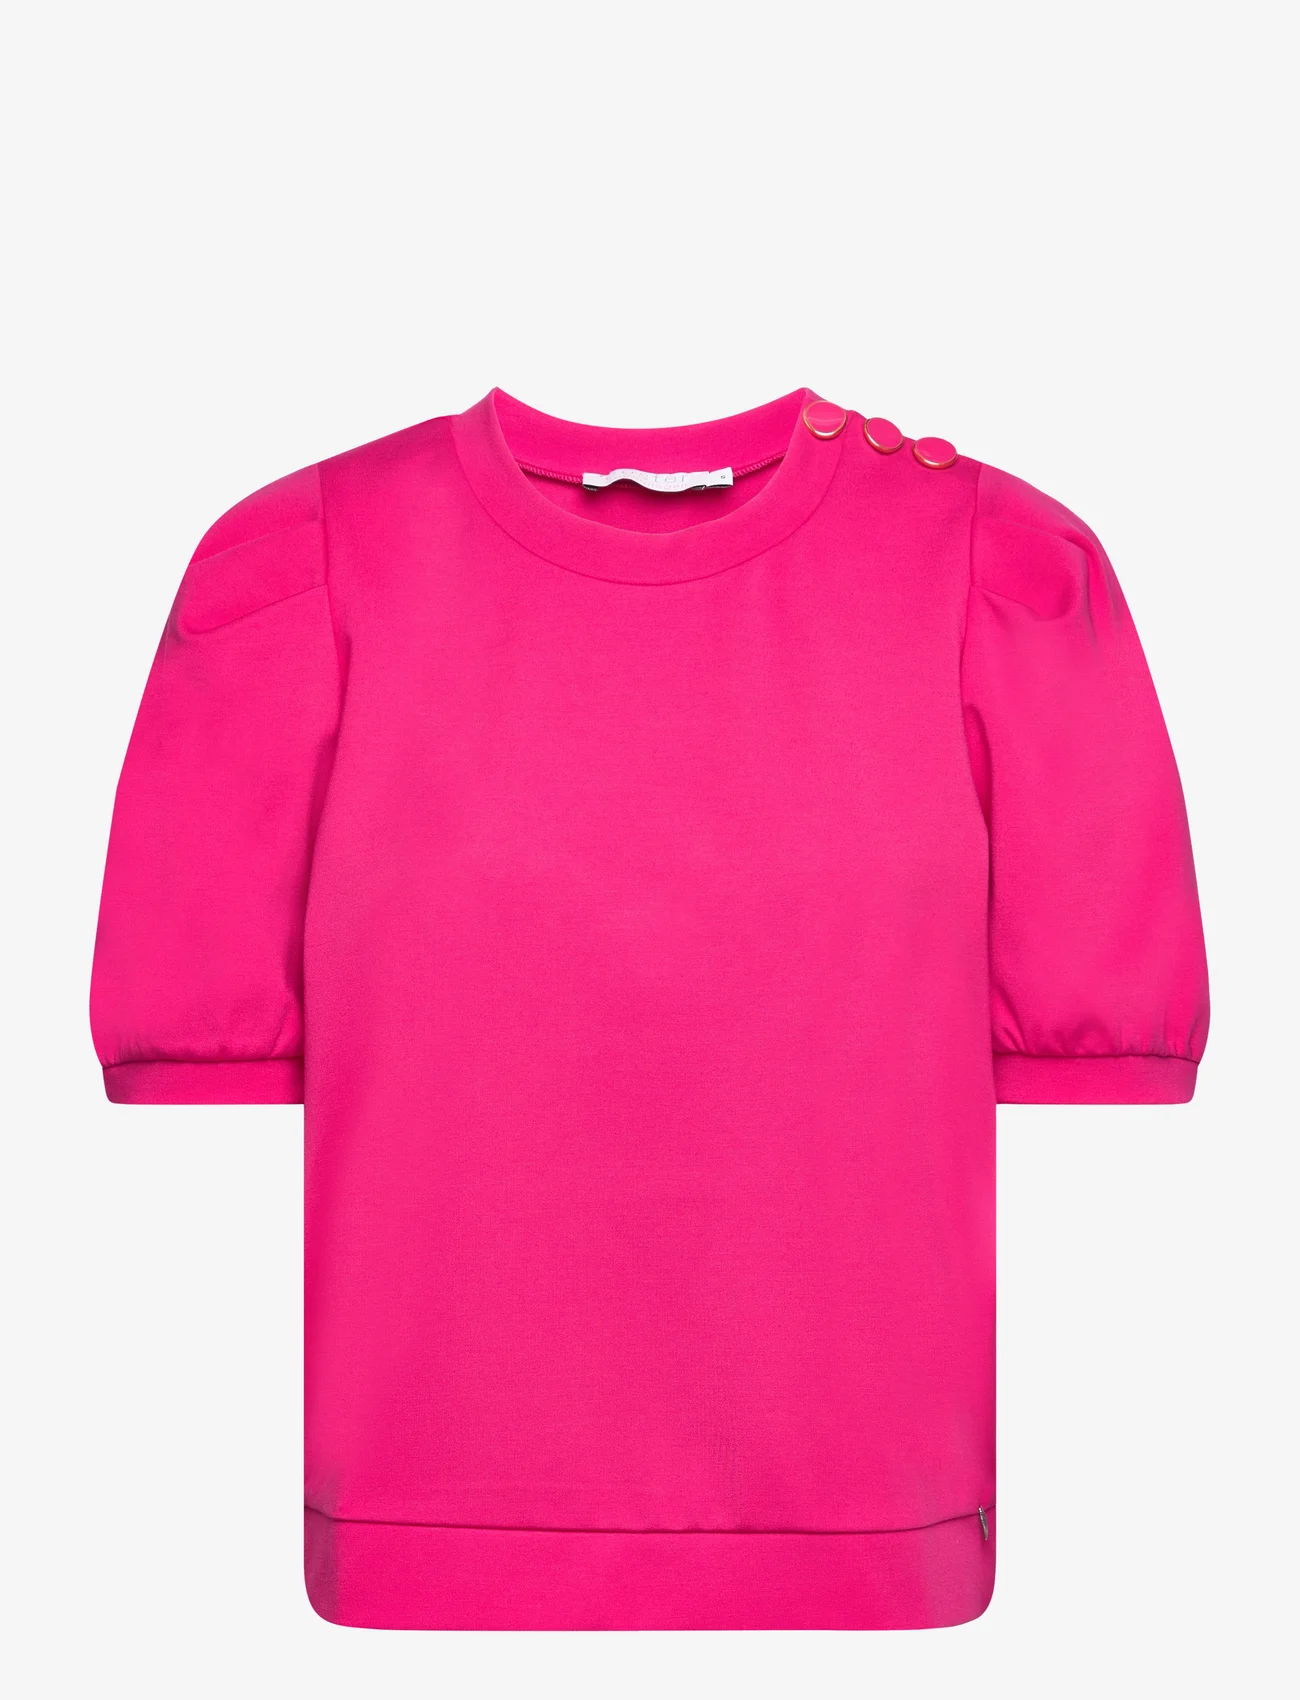 Coster Copenhagen - Sweat shirt with pleats - t-shirts - bright sunrise - 0